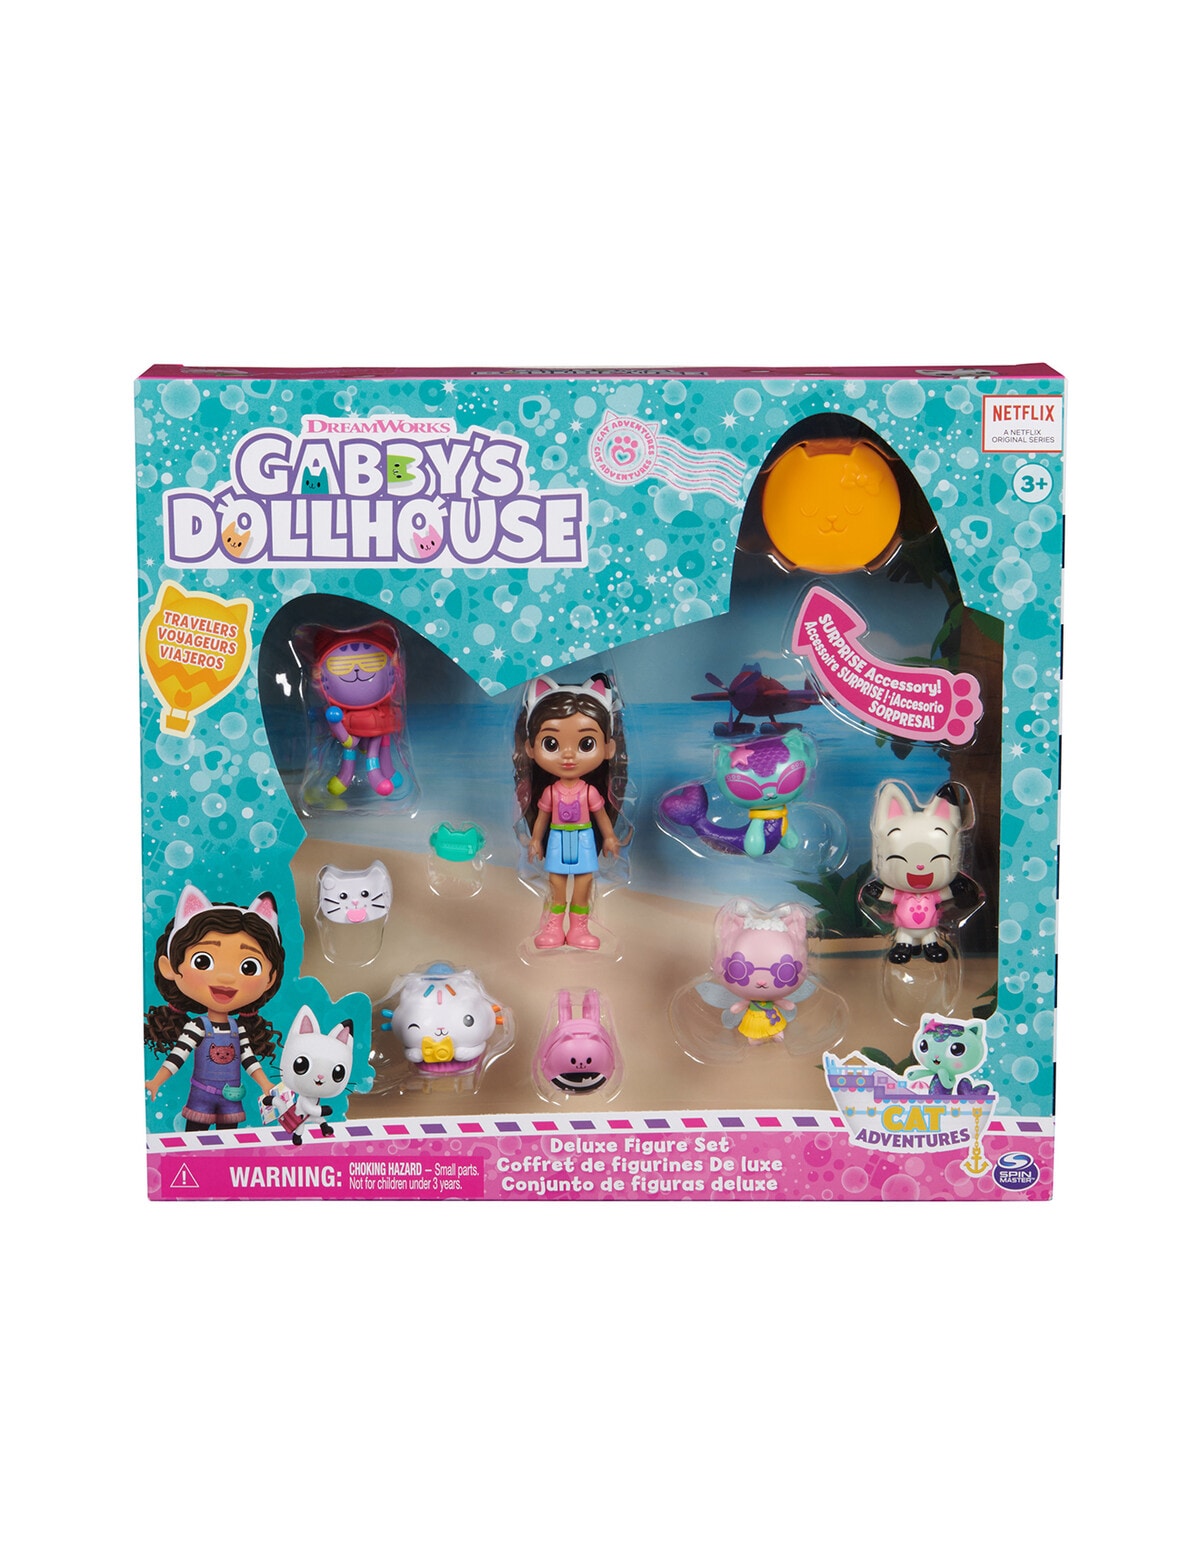  Gabby's Dollhouse, Art Studio Set with 2 Toy Figures